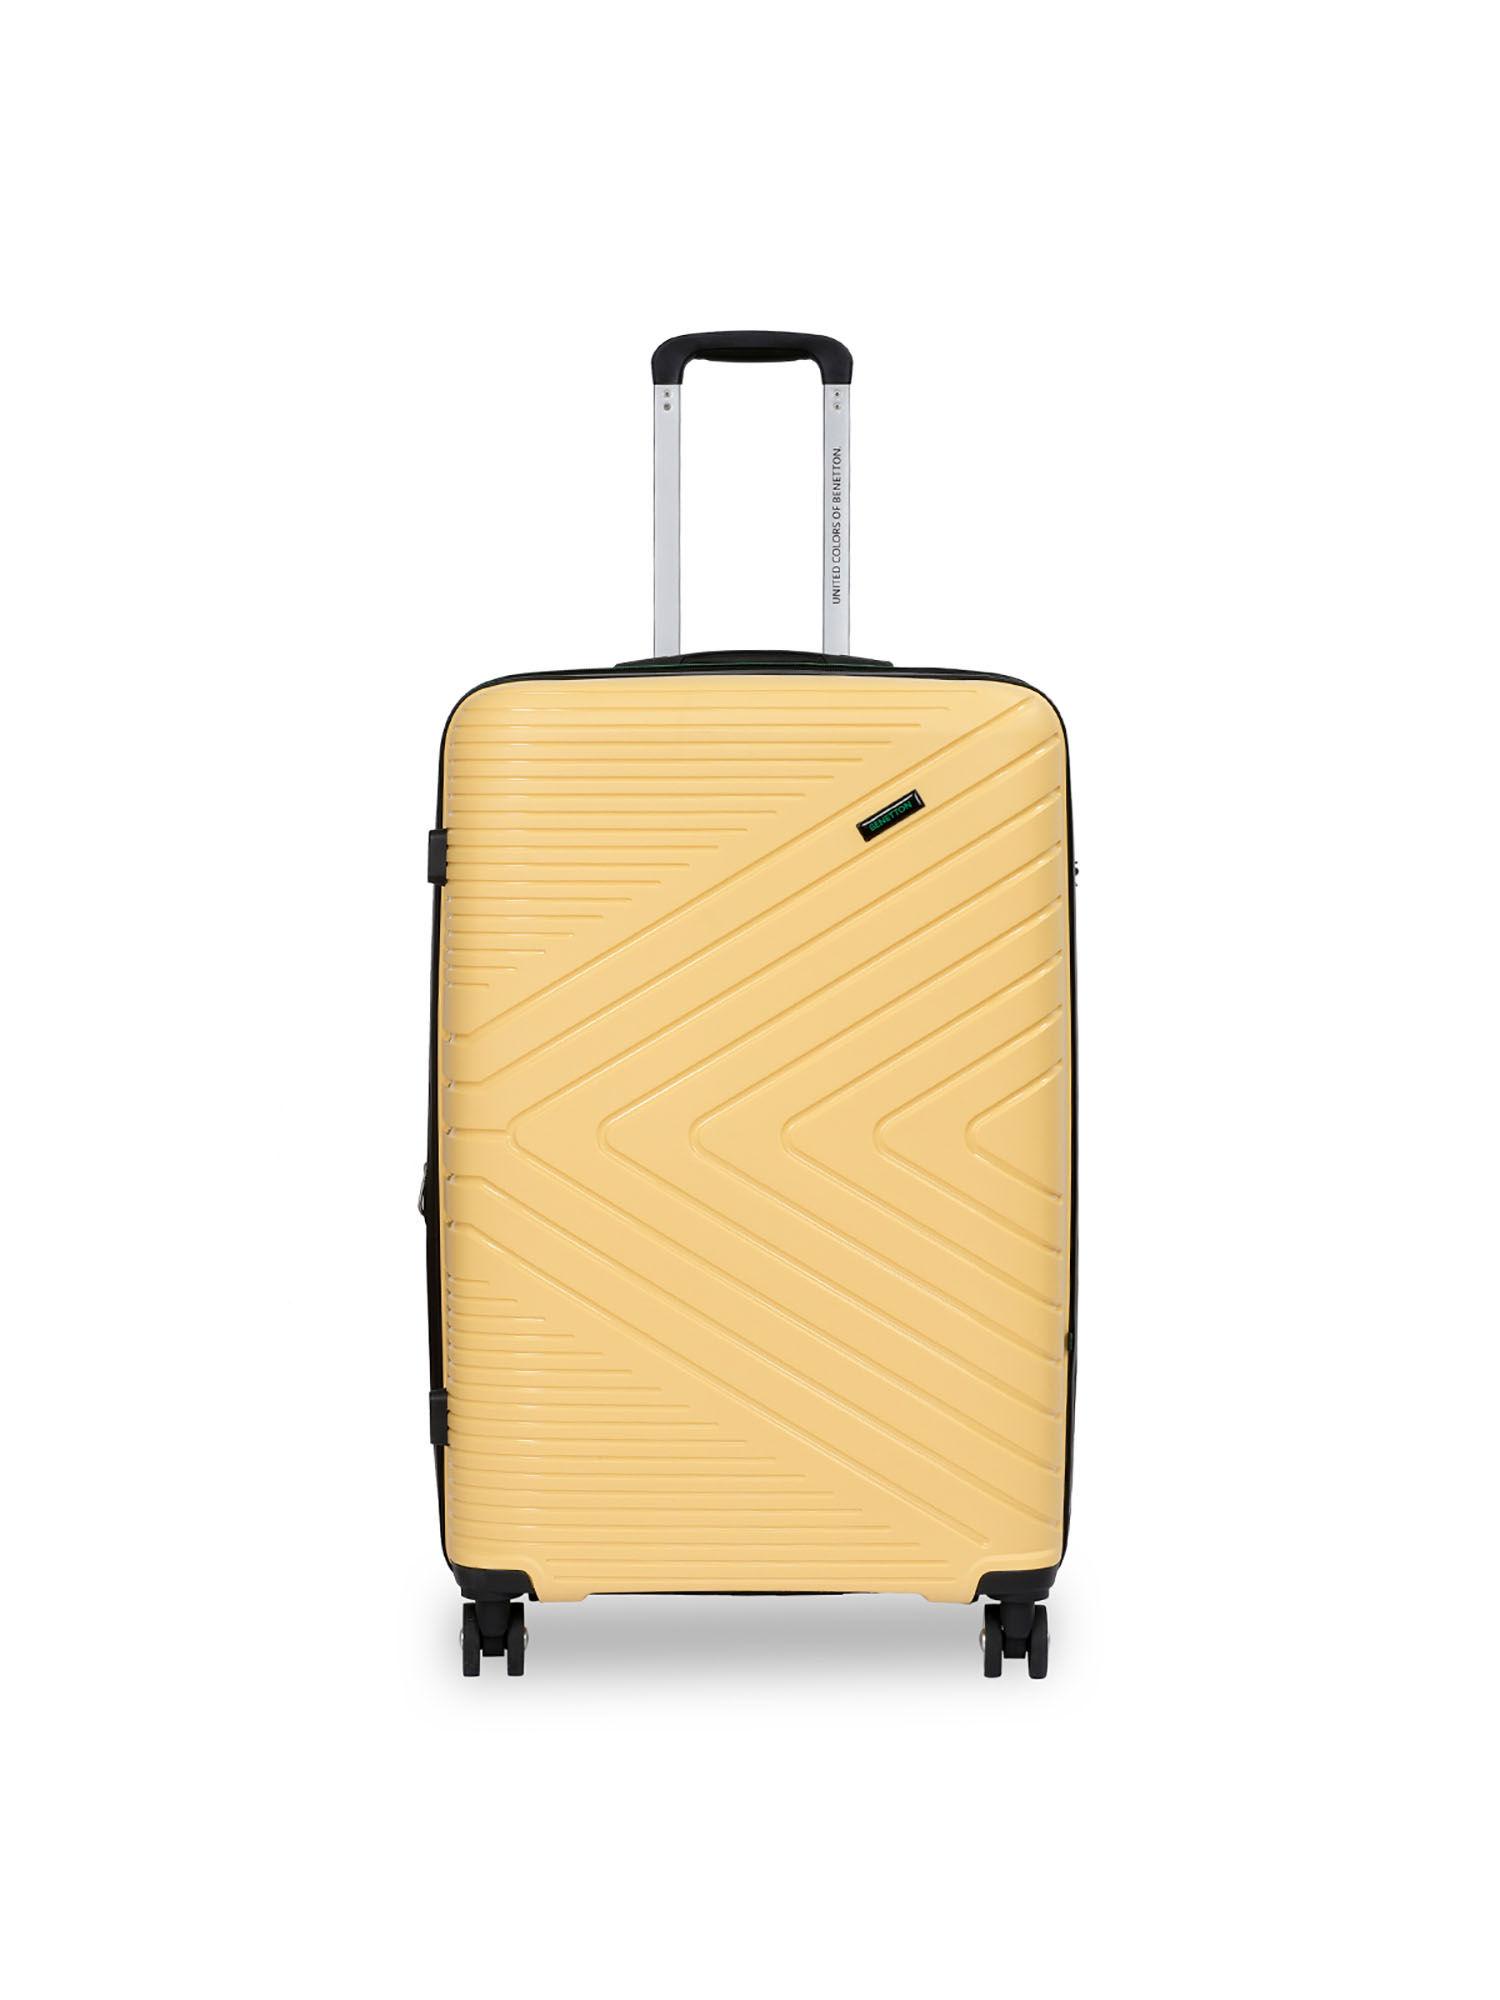 jasper unisex hard luggage - pastel yellow, 56cm cabin trolley bag